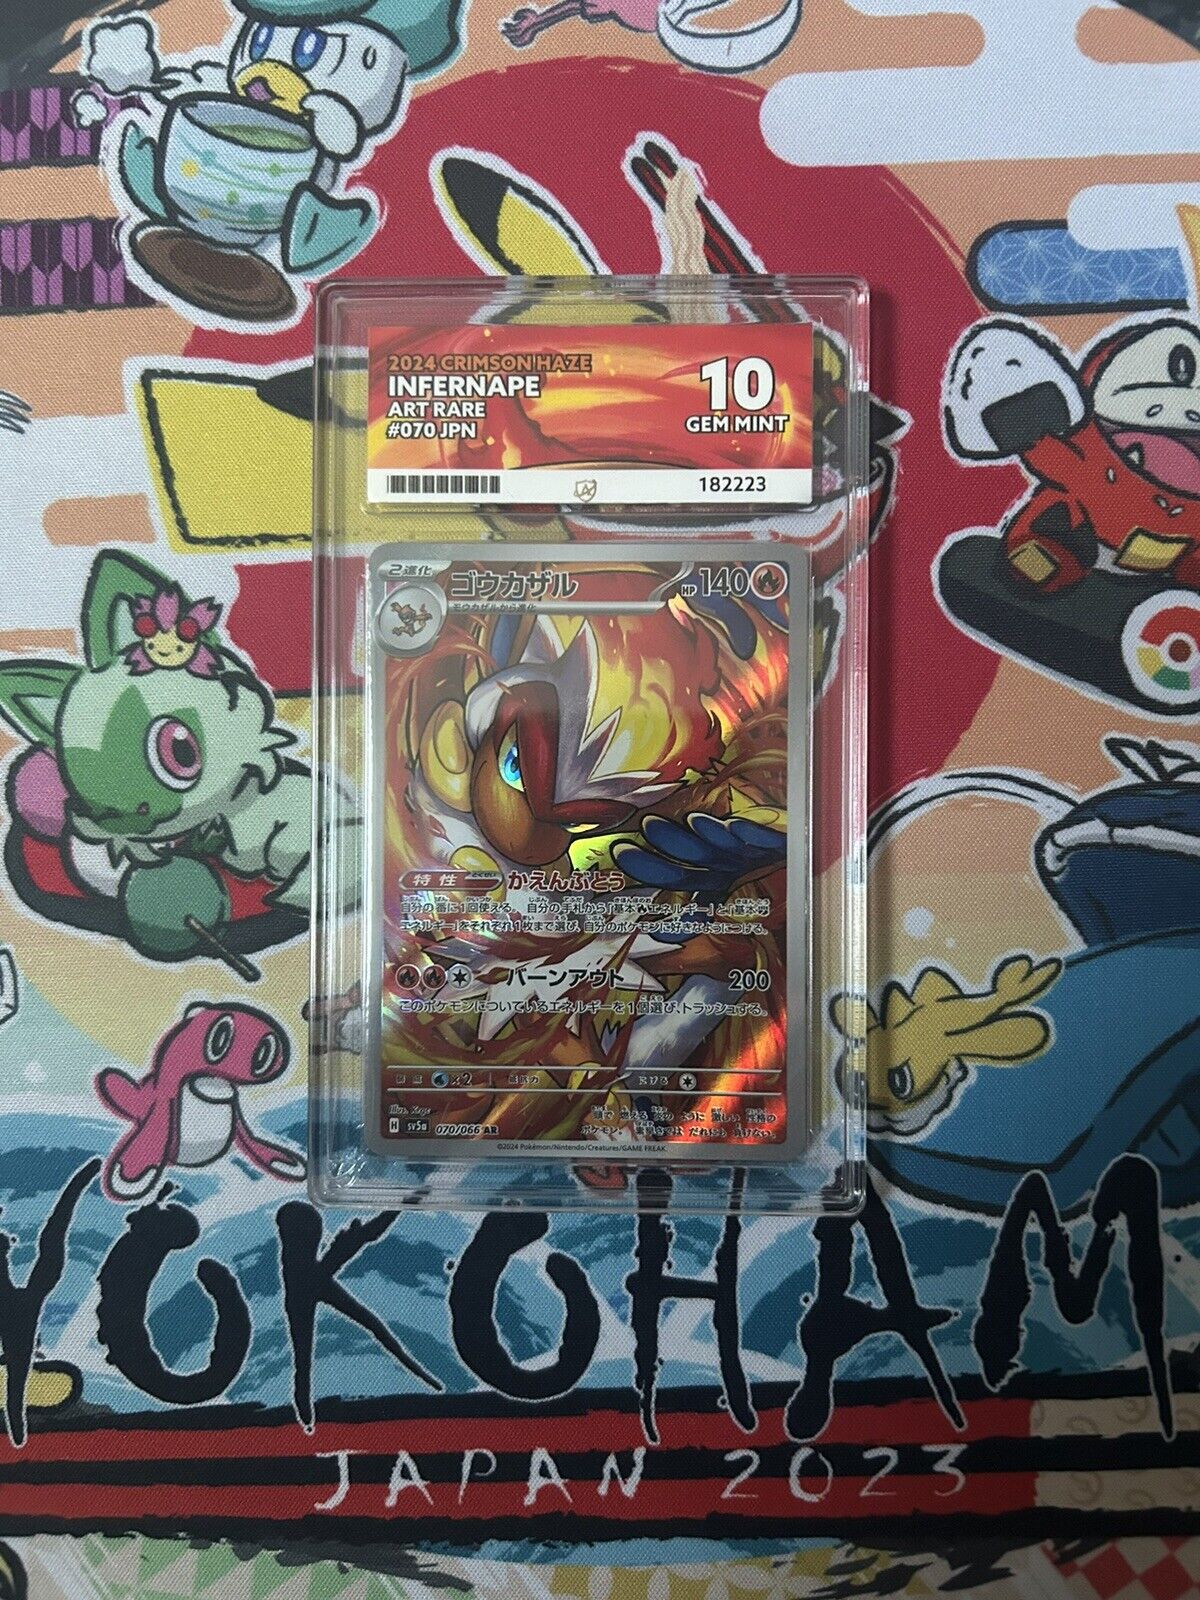 Infernape 070/066 AR SV5a Crimson Haze Graded Ace 10 Gem Mint Pokemon Card